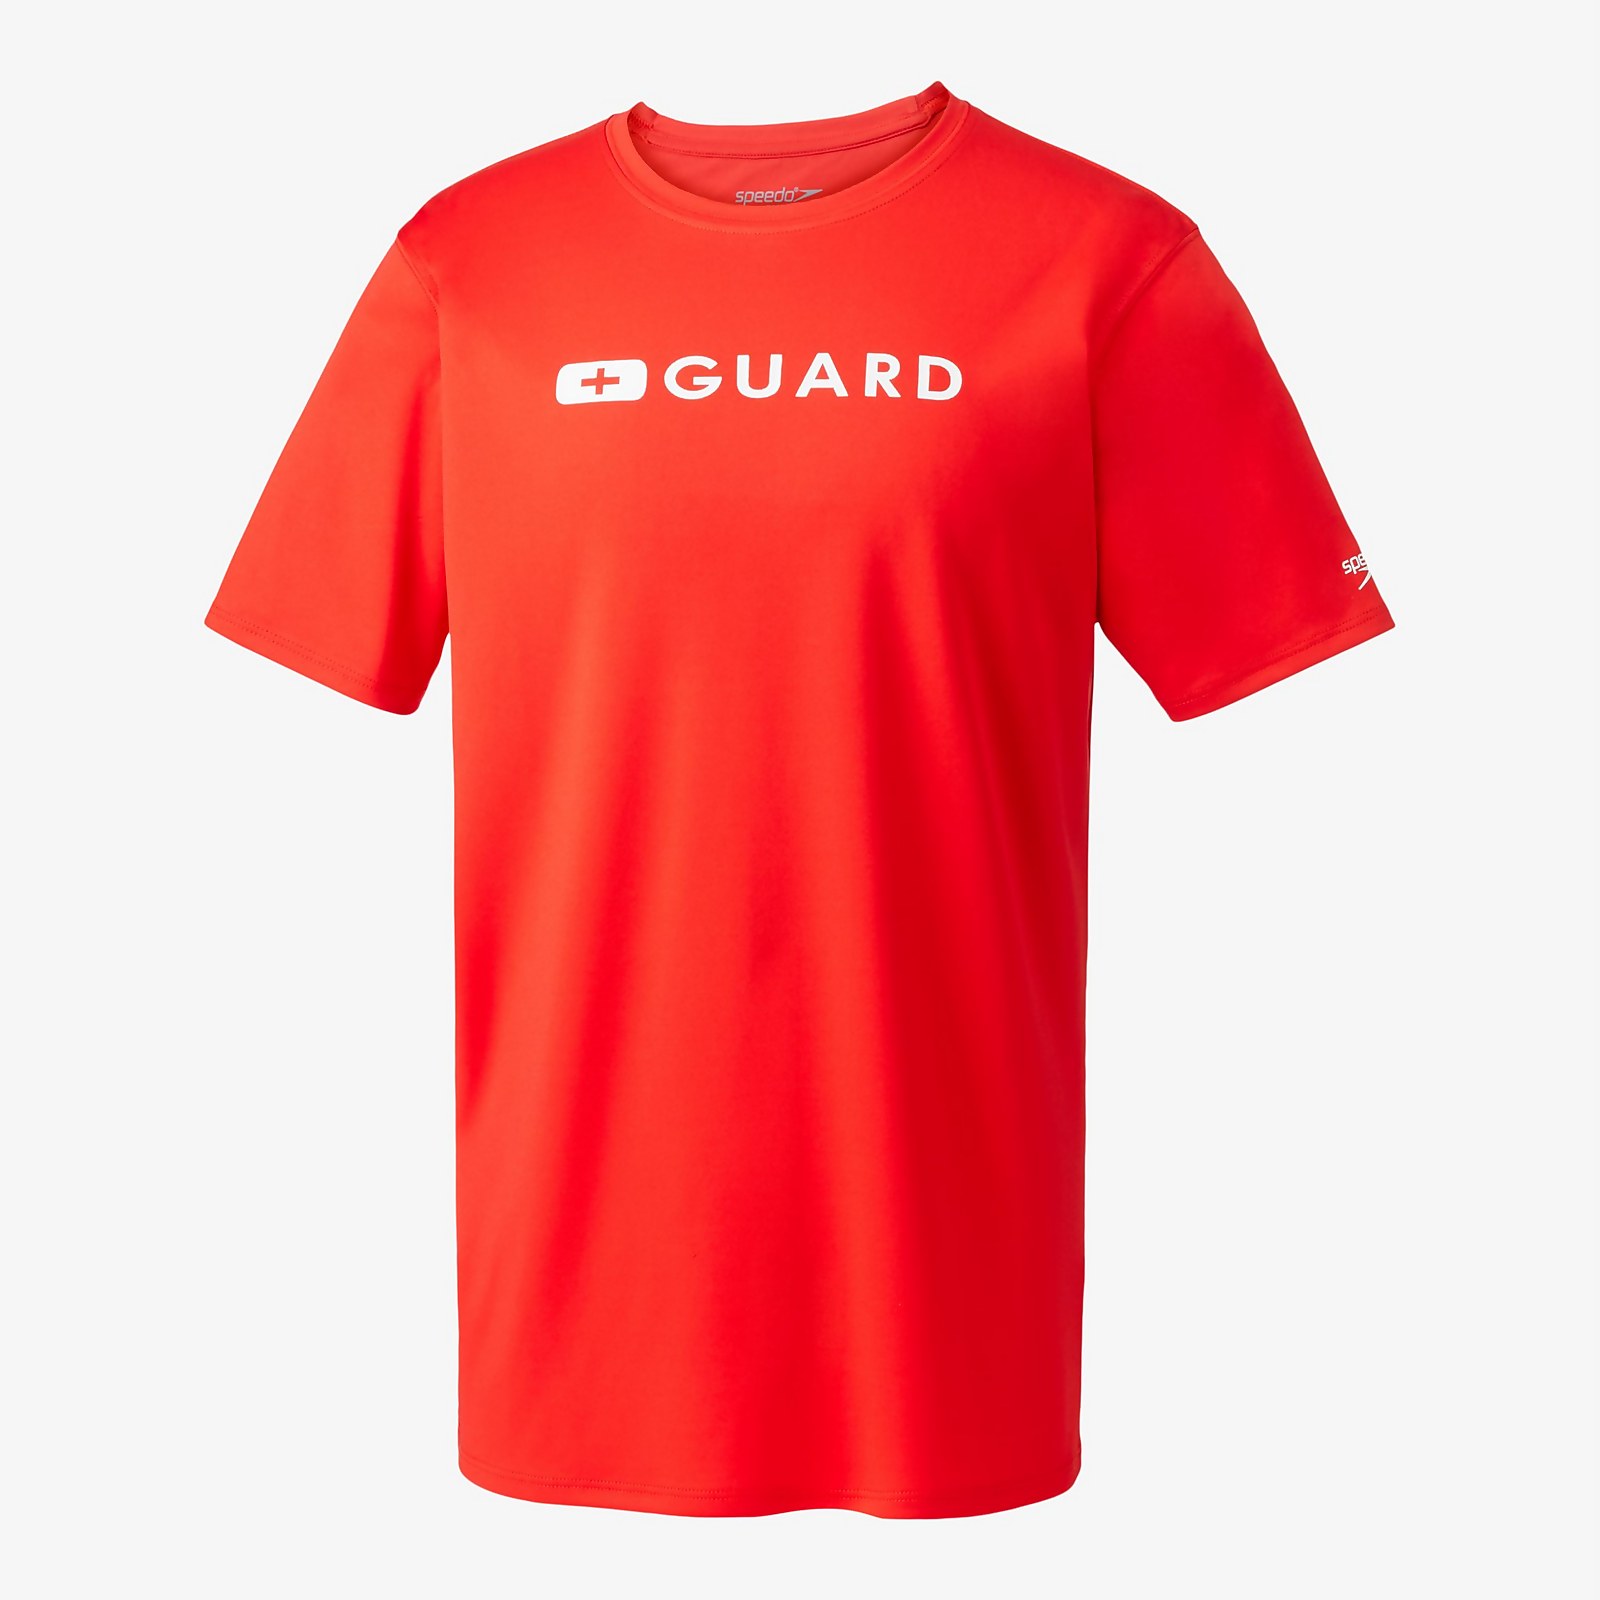 Speedo  Guard New Easy Short Sleeve Tee - L    : Red